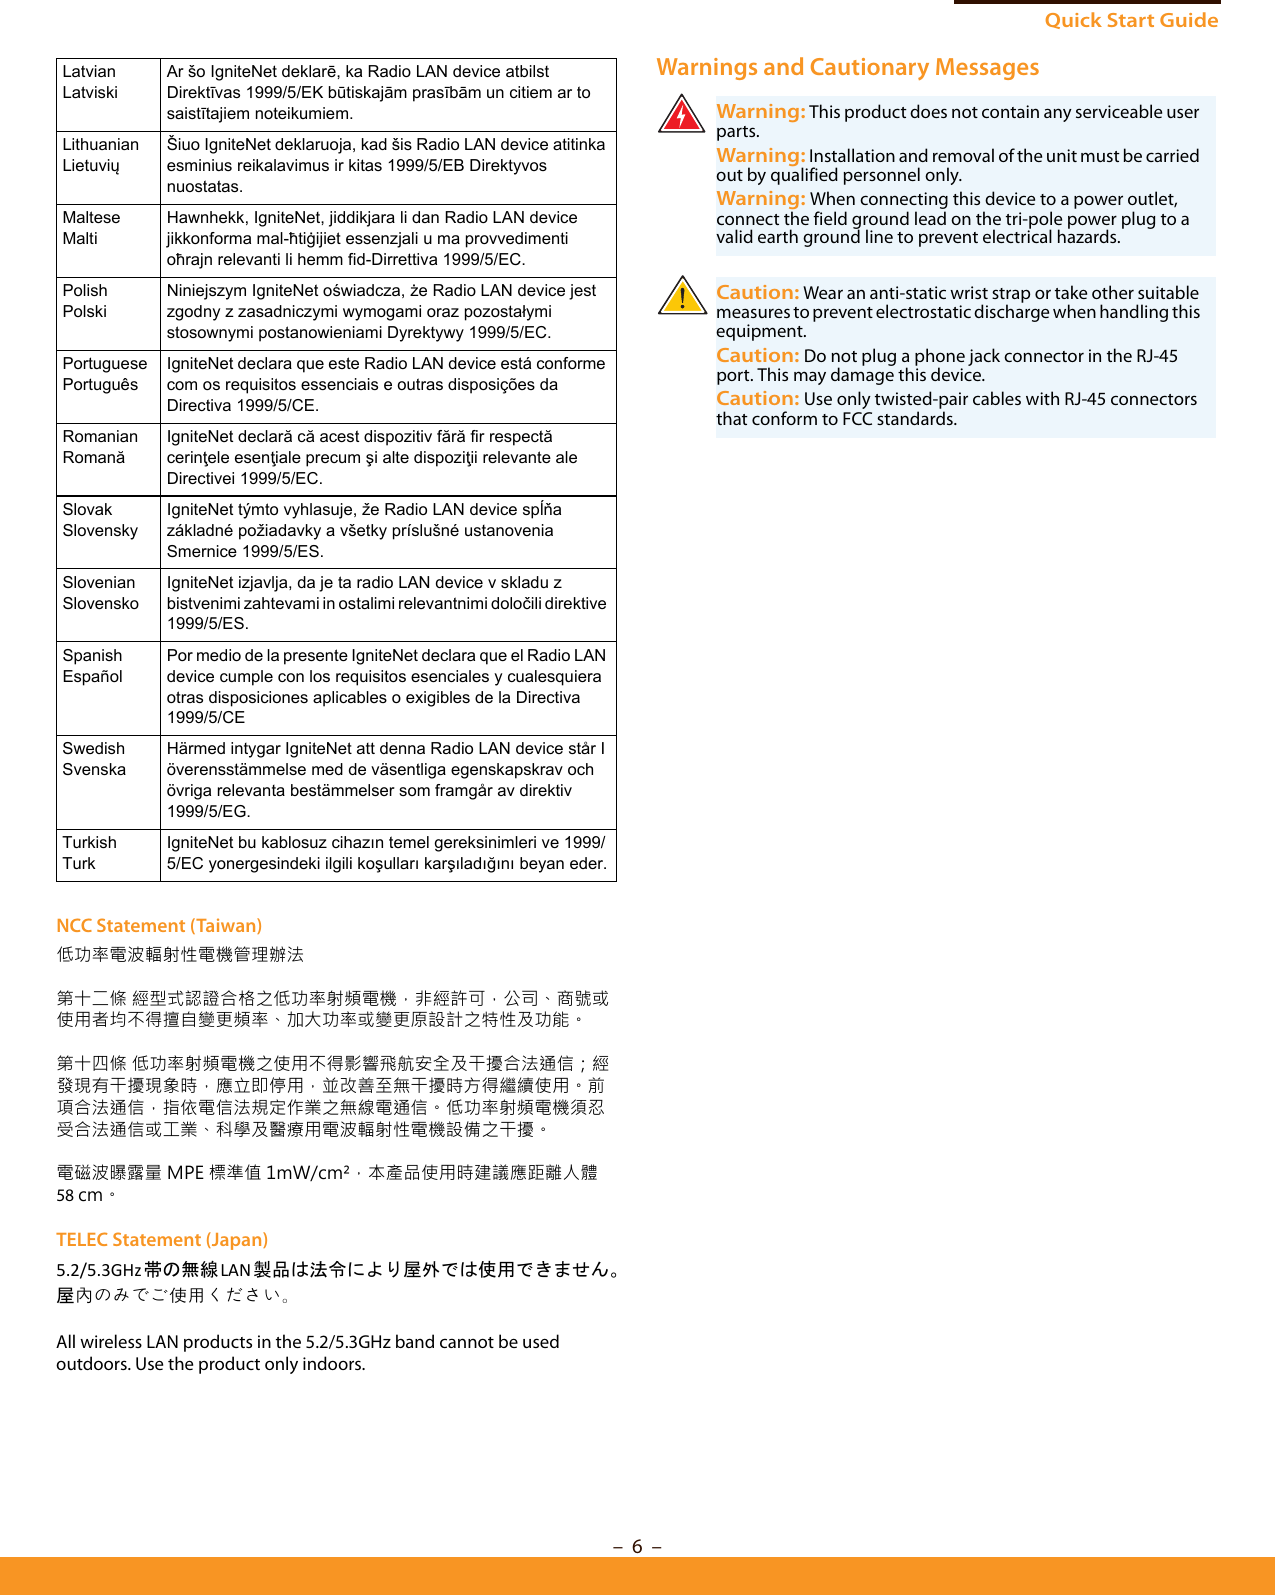 Quick Start Guide–  6  –NCC Statement (Taiwan)低功率電波輻射性電機管理辦法第十二條 經型式認證合格之低功率射頻電機，非經許可，公司、商號或使用者均不得擅自變更頻率、加大功率或變更原設計之特性及功能。第十四條 低功率射頻電機之使用不得影響飛航安全及干擾合法通信；經發現有干擾現象時，應立即停用，並改善至無干擾時方得繼續使用。前項合法通信，指依電信法規定作業之無線電通信。低功率射頻電機須忍受合法通信或工業、科學及醫療用電波輻射性電機設備之干擾。電磁波曝露量 MPE 標準值 1mW/cm²，本產品使用時建議應距離人體58 cm。TELEC Statement (Japan)5.2/5.3GHz帯の無線LAN 製品は法令により屋外では使用できません。屋內のみでご使用ください。All wireless LAN products in the 5.2/5.3GHz band cannot be used outdoors. Use the product only indoors.Warnings and Cautionary MessagesLatvianLatviskiAr šo IgniteNet deklarē, ka Radio LAN device atbilst Direktīvas 1999/5/EK būtiskajām prasībām un citiem ar to saistītajiem noteikumiem.LithuanianLietuviųŠiuo IgniteNet deklaruoja, kad šis Radio LAN device atitinka esminius reikalavimus ir kitas 1999/5/EB Direktyvos nuostatas.MalteseMaltiHawnhekk, IgniteNet, jiddikjara li dan Radio LAN device jikkonforma mal-ħtiġijiet essenzjali u ma provvedimenti oħrajn relevanti li hemm fid-Dirrettiva 1999/5/EC.PolishPolskiNiniejszym IgniteNet oświadcza, że Radio LAN device jest zgodny z zasadniczymi wymogami oraz pozostałymi stosownymi postanowieniami Dyrektywy 1999/5/EC.PortuguesePortuguêsIgniteNet declara que este Radio LAN device está conforme com os requisitos essenciais e outras disposições da Directiva 1999/5/CE.RomanianRomanăIgniteNet declară că acest dispozitiv fără fir respectă cerinţele esenţiale precum şi alte dispoziţii relevante ale Directivei 1999/5/EC.SlovakSlovenskyIgniteNet týmto vyhlasuje, že Radio LAN device spĺňa základné požiadavky a všetky príslušné ustanovenia Smernice 1999/5/ES.SlovenianSlovenskoIgniteNet izjavlja, da je ta radio LAN device v skladu z bistvenimi zahtevami in ostalimi relevantnimi določili direktive 1999/5/ES.SpanishEspañolPor medio de la presente IgniteNet declara que el Radio LAN device cumple con los requisitos esenciales y cualesquiera otras disposiciones aplicables o exigibles de la Directiva 1999/5/CESwedishSvenskaHärmed intygar IgniteNet att denna Radio LAN device står I överensstämmelse med de väsentliga egenskapskrav och övriga relevanta bestämmelser som framgår av direktiv 1999/5/EG.TurkishTurkIgniteNet bu kablosuz cihazın temel gereksinimleri ve 1999/5/EC yonergesindeki ilgili koşulları karşıladığını beyan eder.Warning: This product does not contain any serviceable user parts.Warning: Installation and removal of the unit must be carried out by qualified personnel only.Warning: When connecting this device to a power outlet, connect the field ground lead on the tri-pole power plug to a valid earth ground line to prevent electrical hazards.Caution: Wear an anti-static wrist strap or take other suitable measures to prevent electrostatic discharge when handling this equipment.Caution: Do not plug a phone jack connector in the RJ-45 port. This may damage this device. Caution: Use only twisted-pair cables with RJ-45 connectors that conform to FCC standards. 